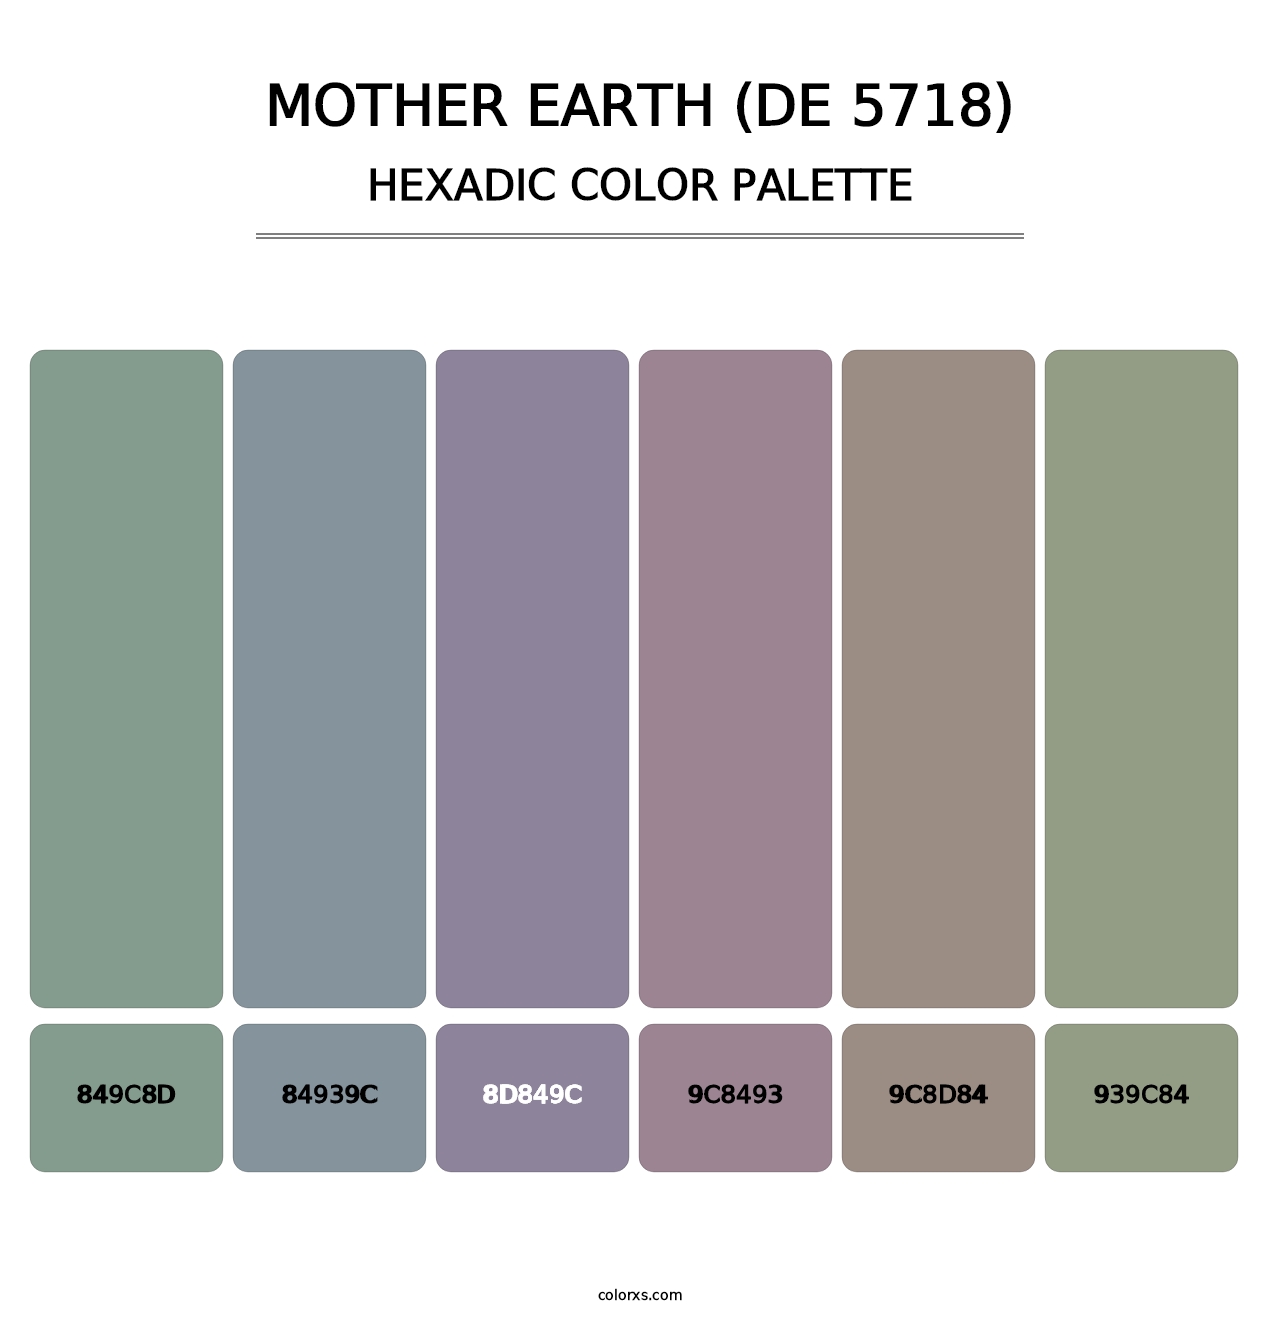 Mother Earth (DE 5718) - Hexadic Color Palette